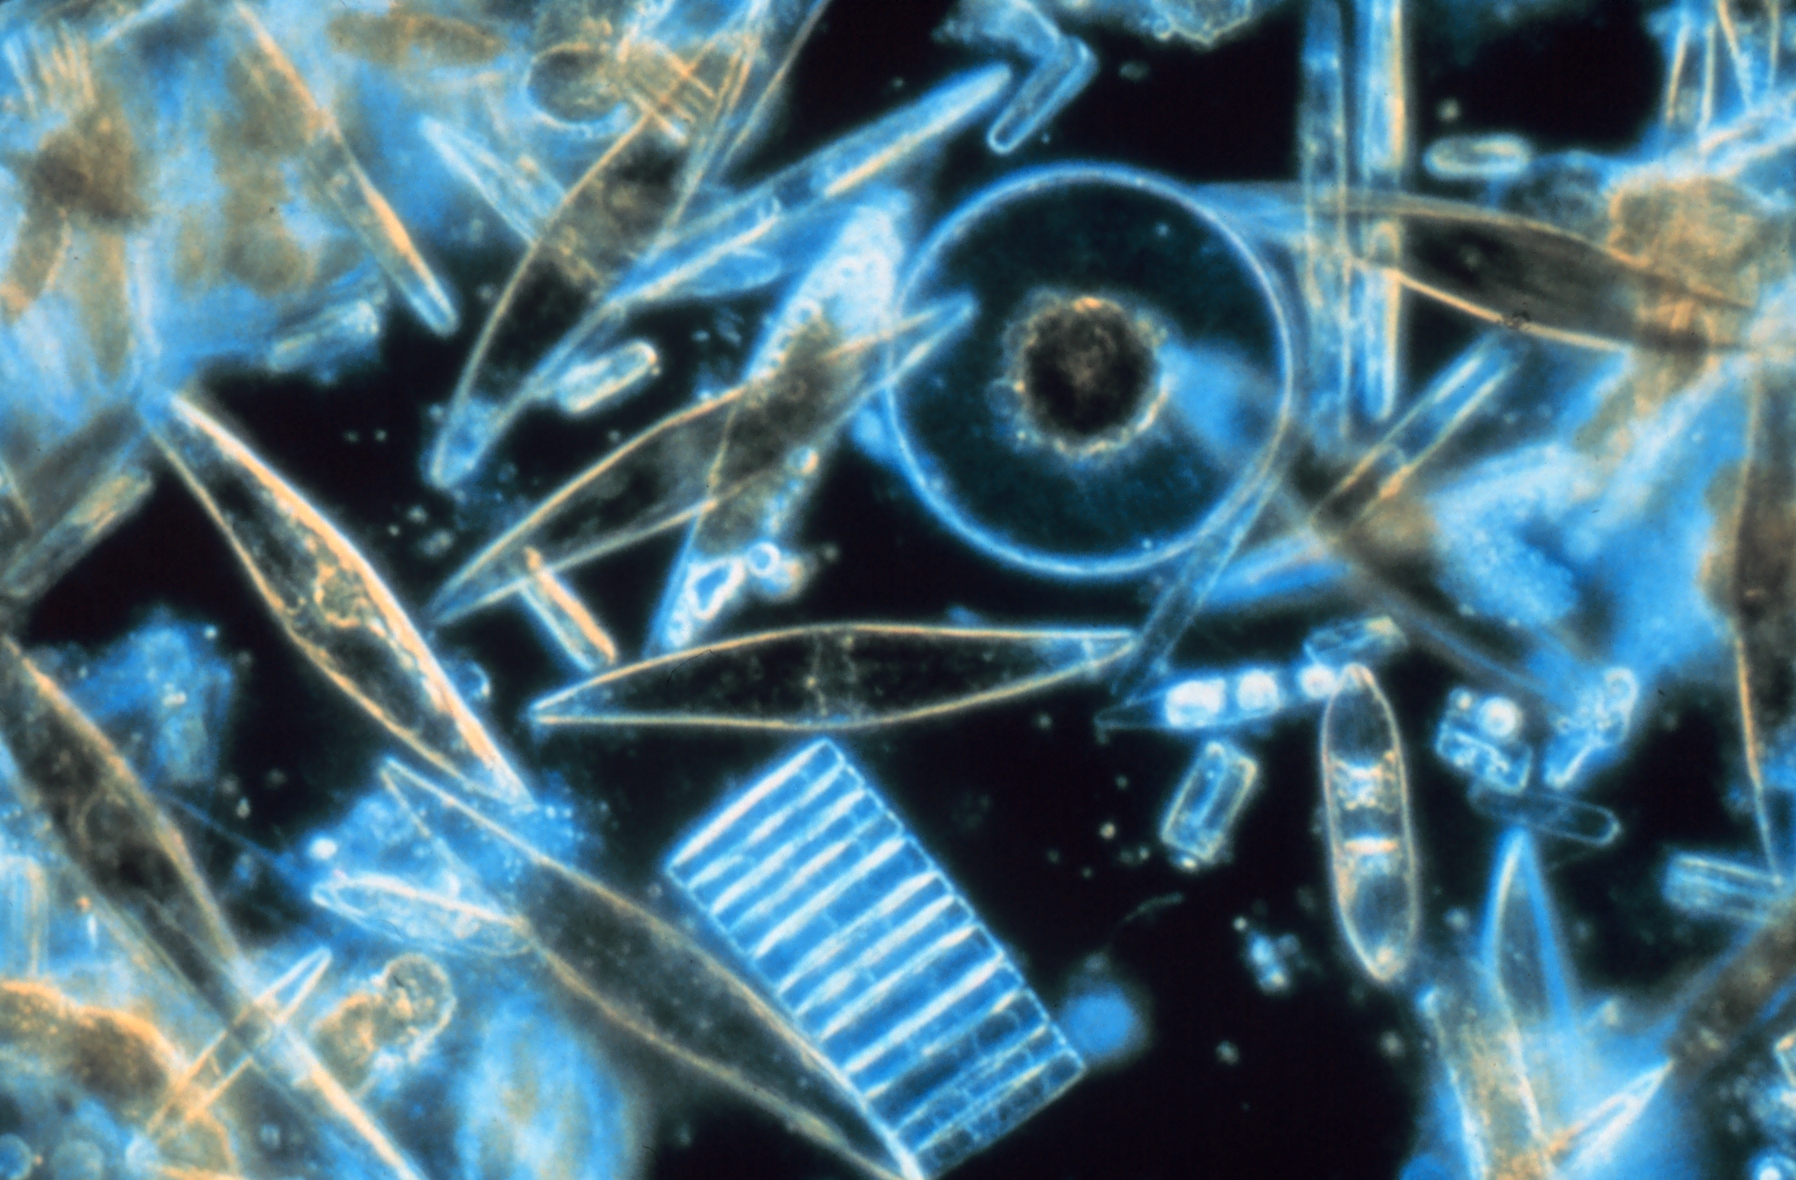 Planktom diatoms through the Macduff Marine Aquarium microscope.